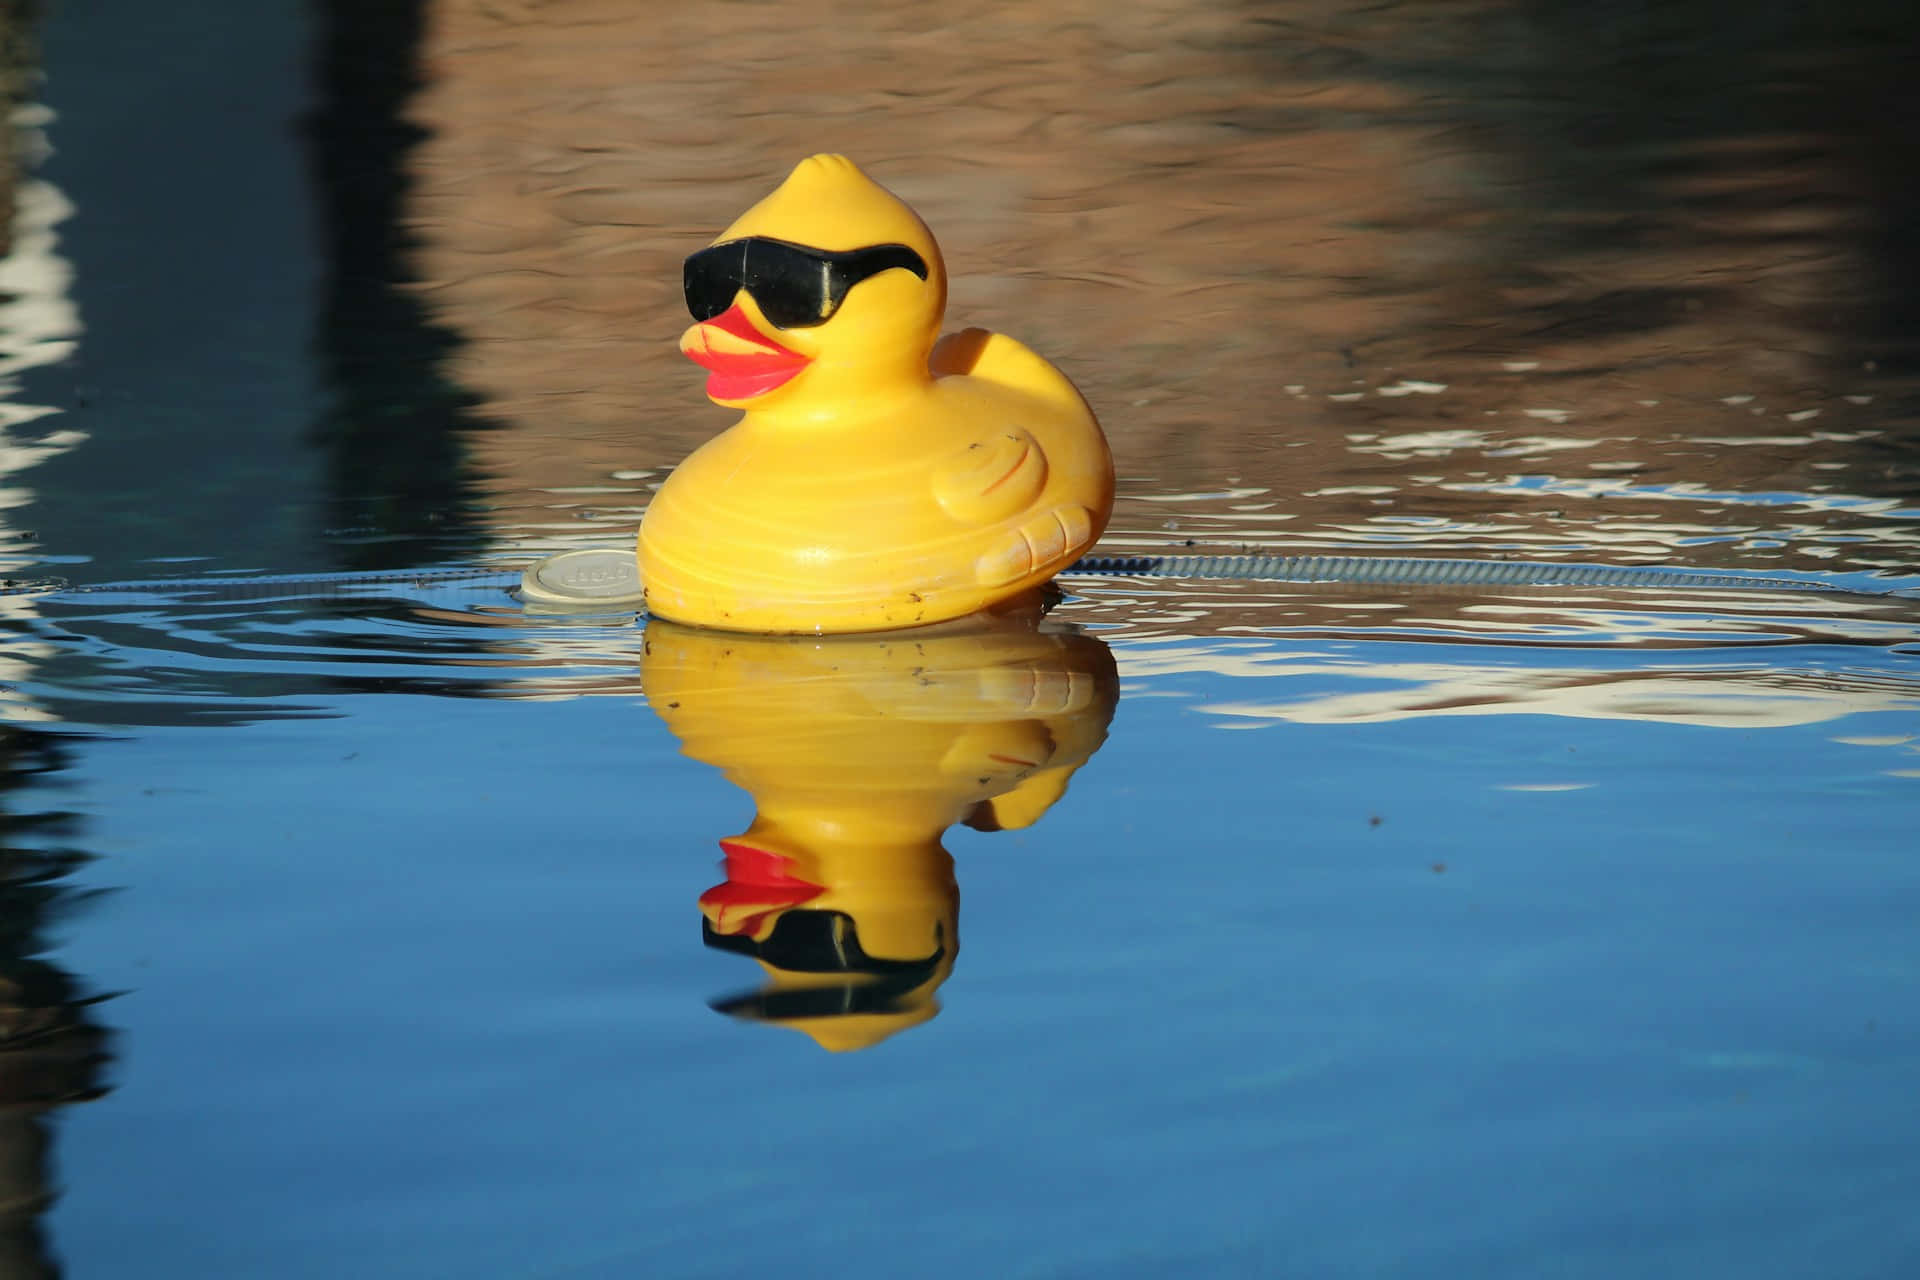 Cool Rubber Ducky Sunglasses Water Reflection.jpg Wallpaper